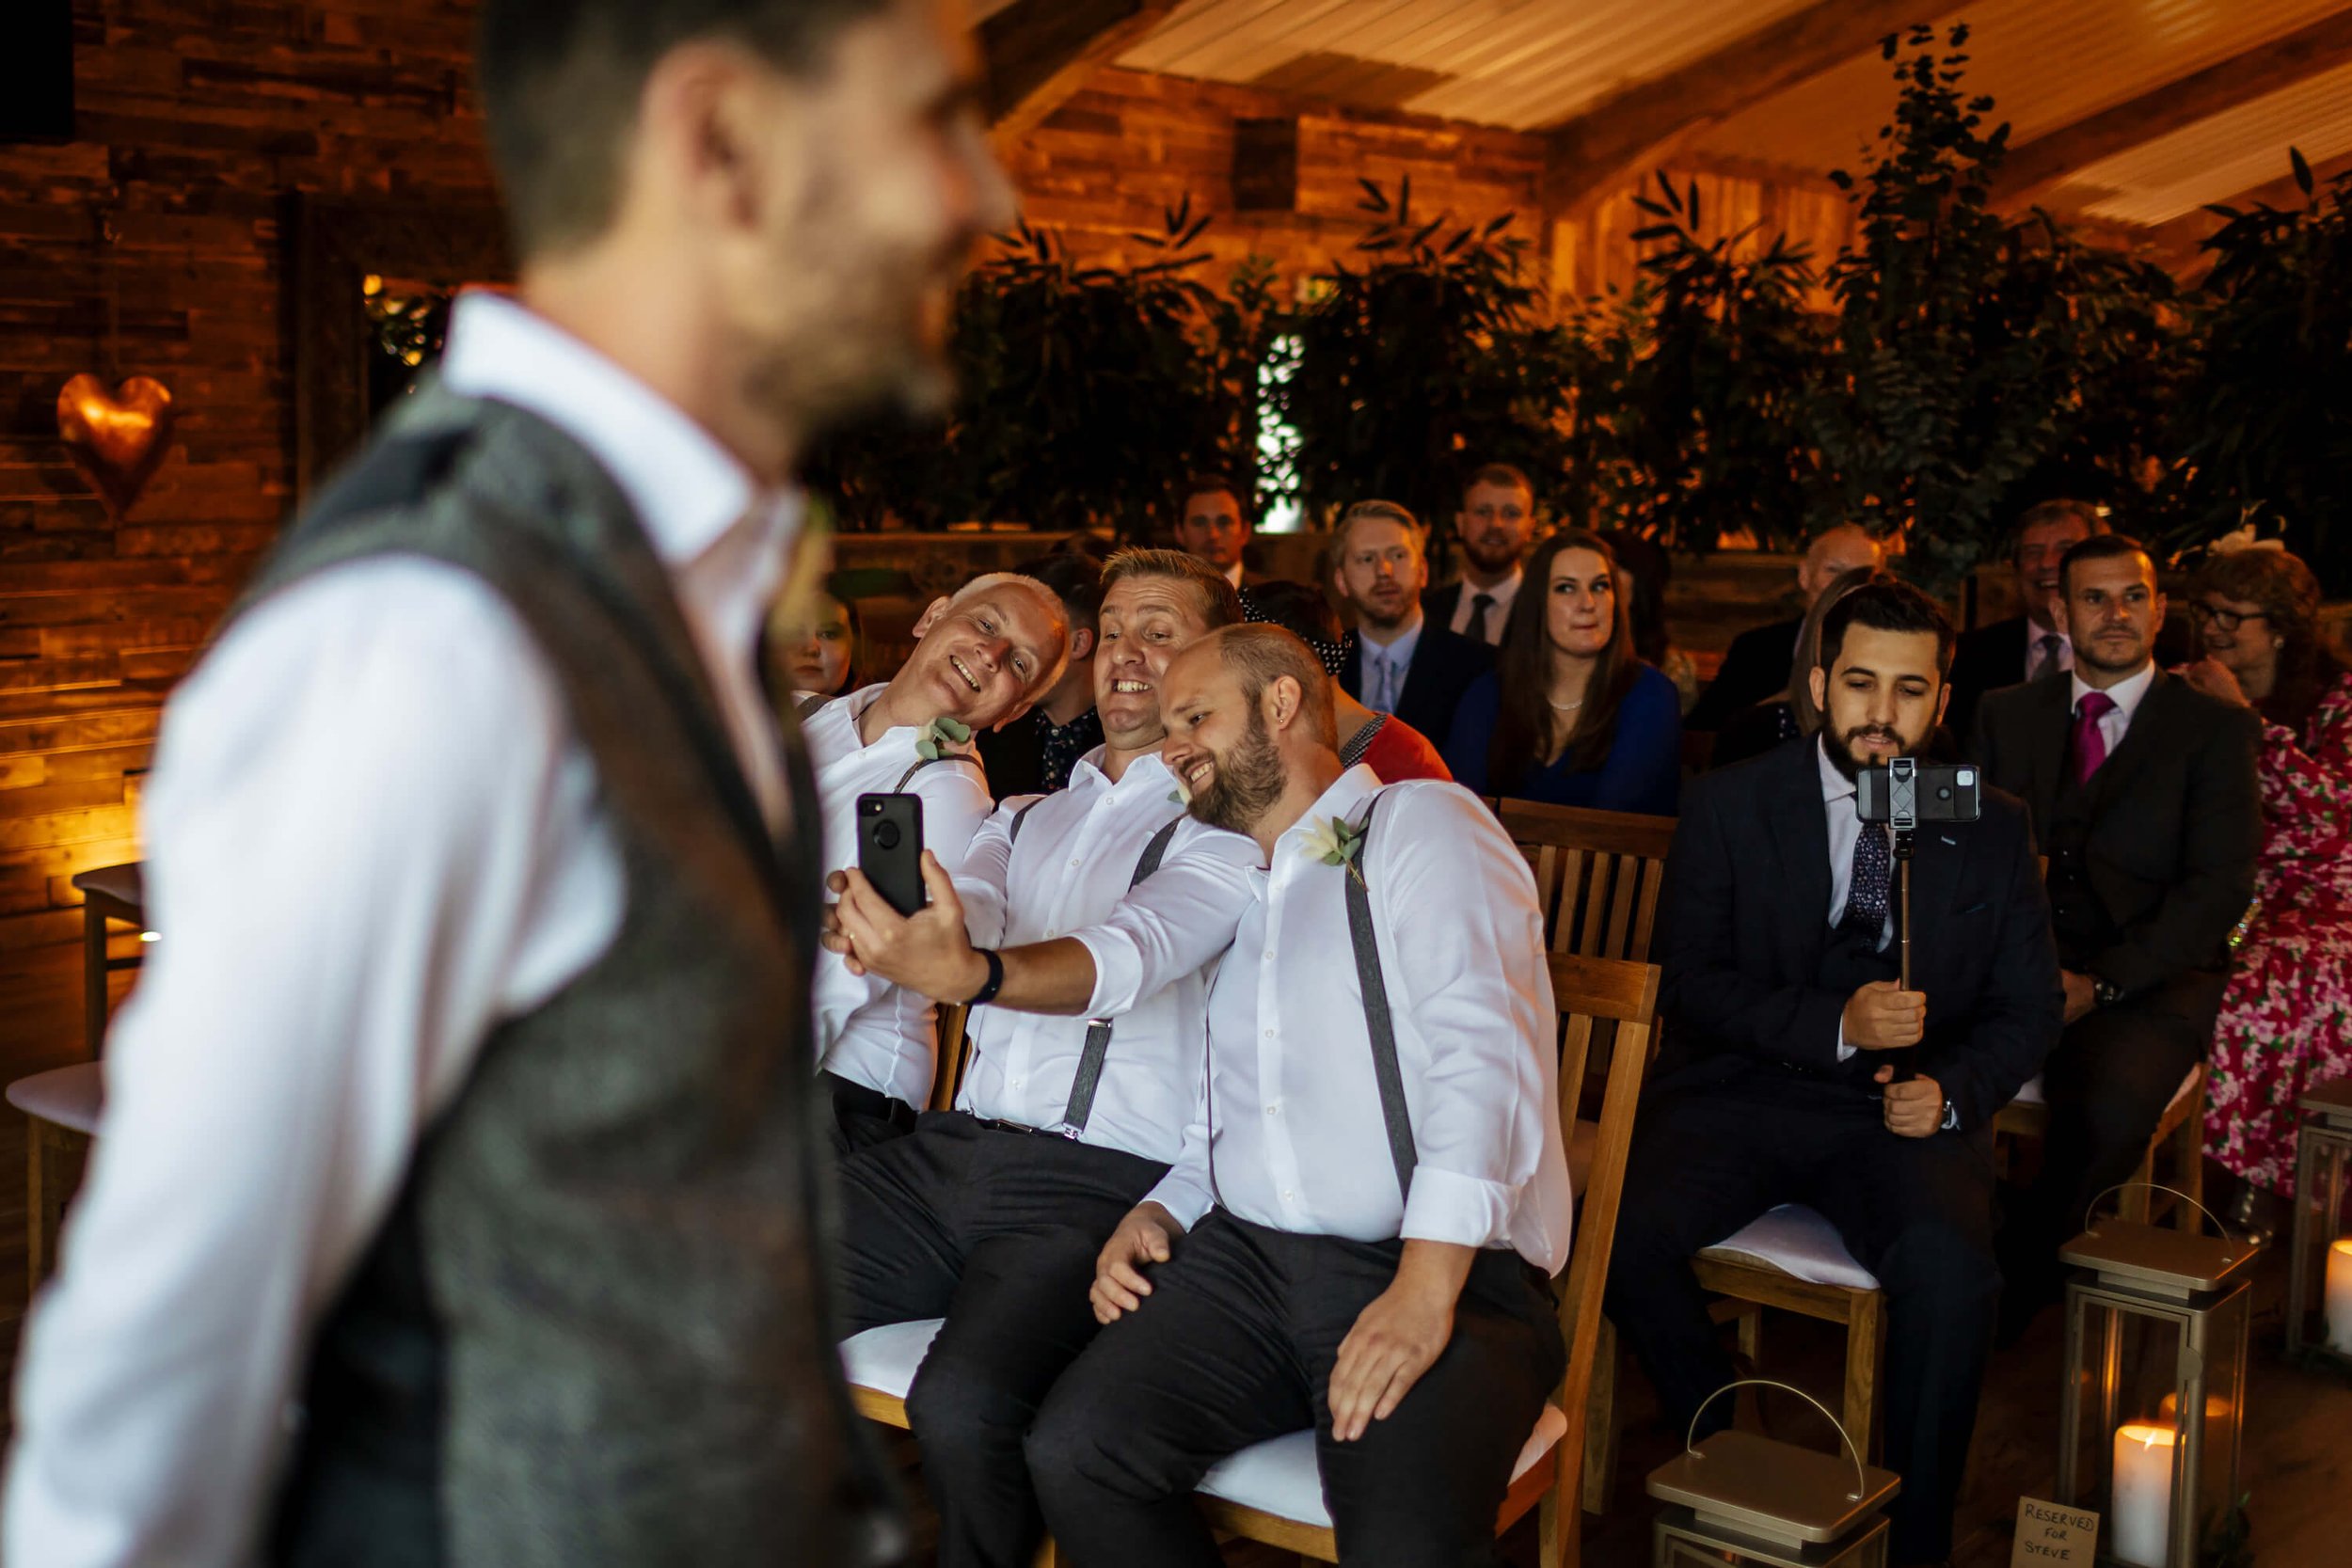 Groomsmen doing a selfie at the wedding